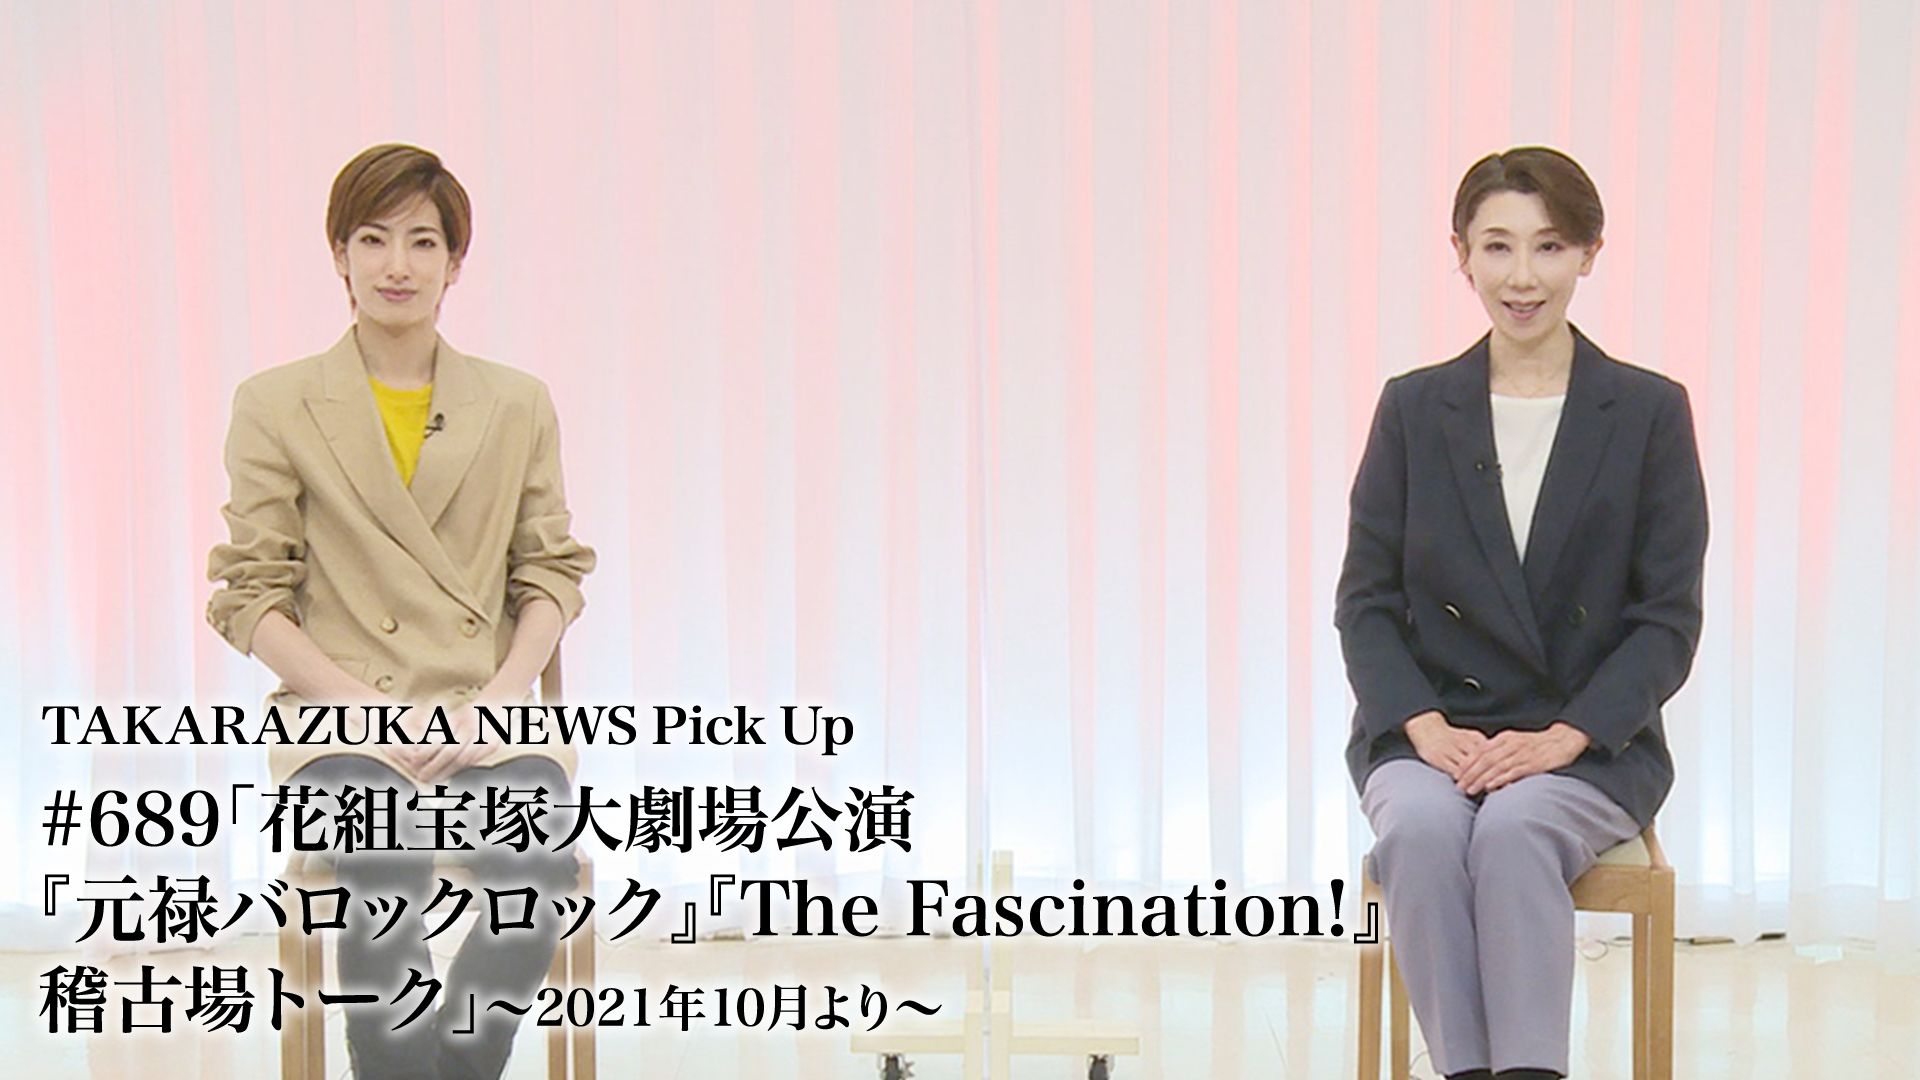 TAKARAZUKA NEWS Pick Up #689「花組宝塚大劇場公演『元禄バロックロック』『The Fascination!』稽古場トーク」